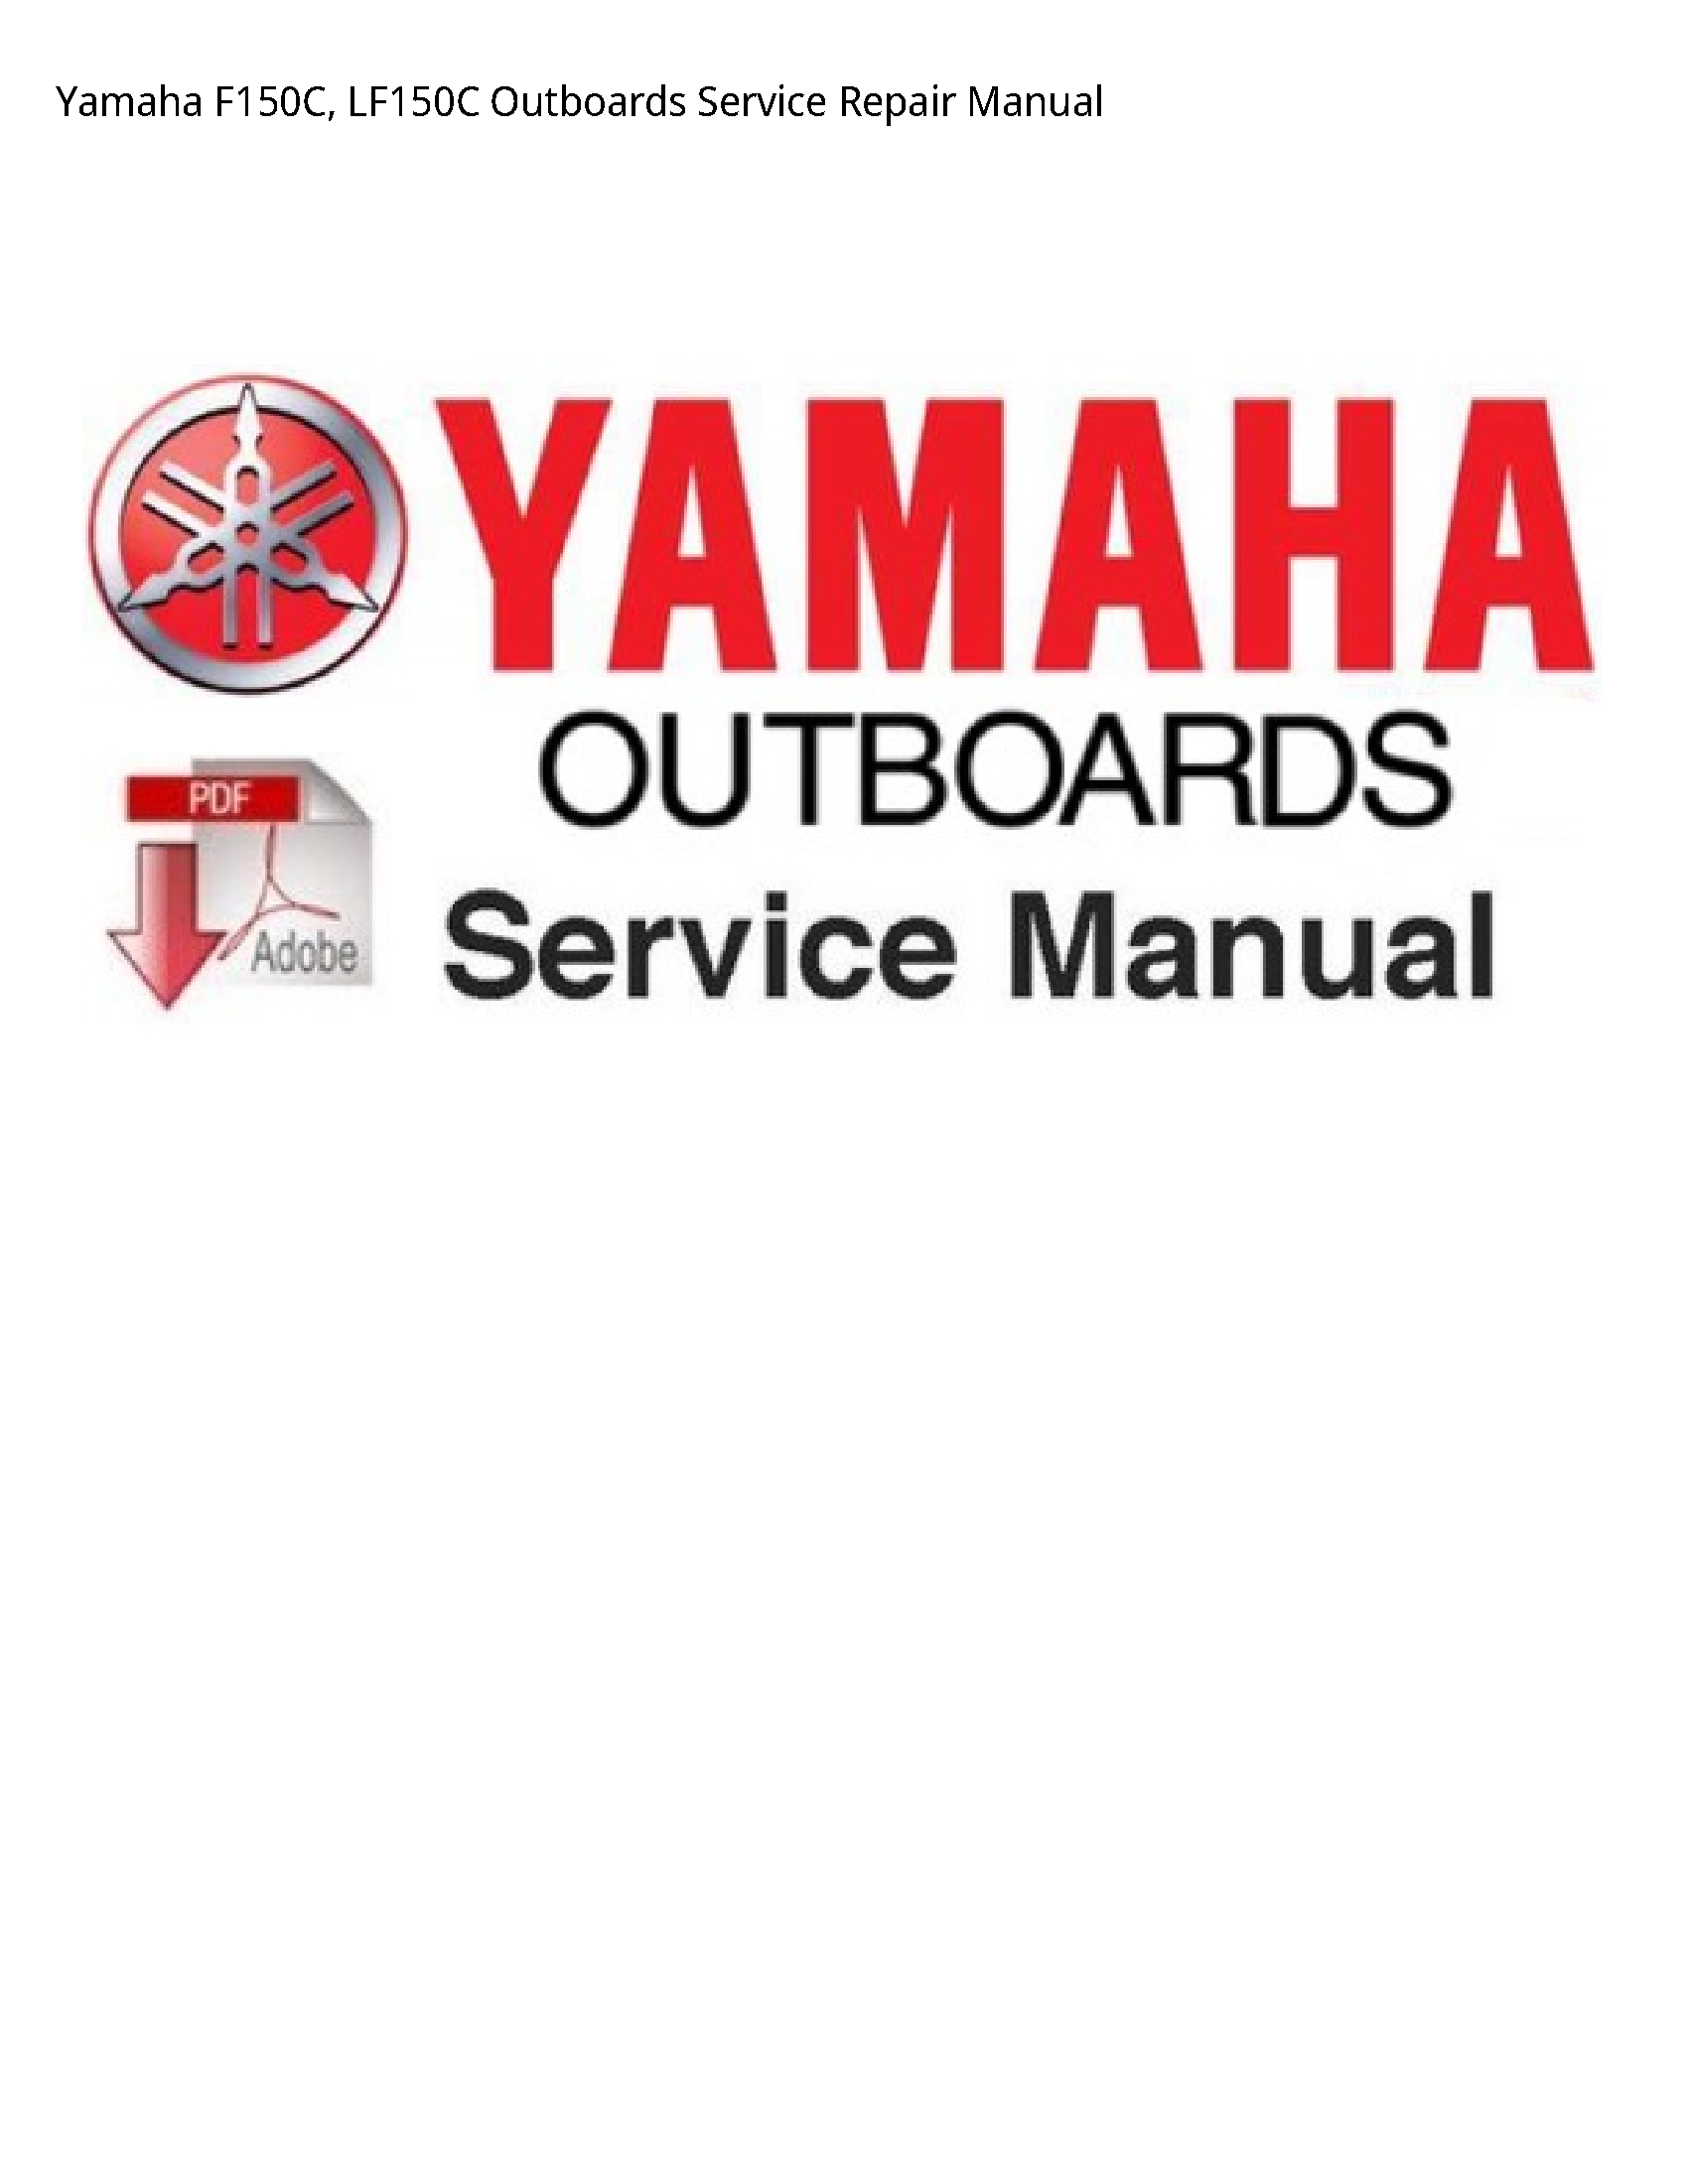 Yamaha F150C Outboards manual